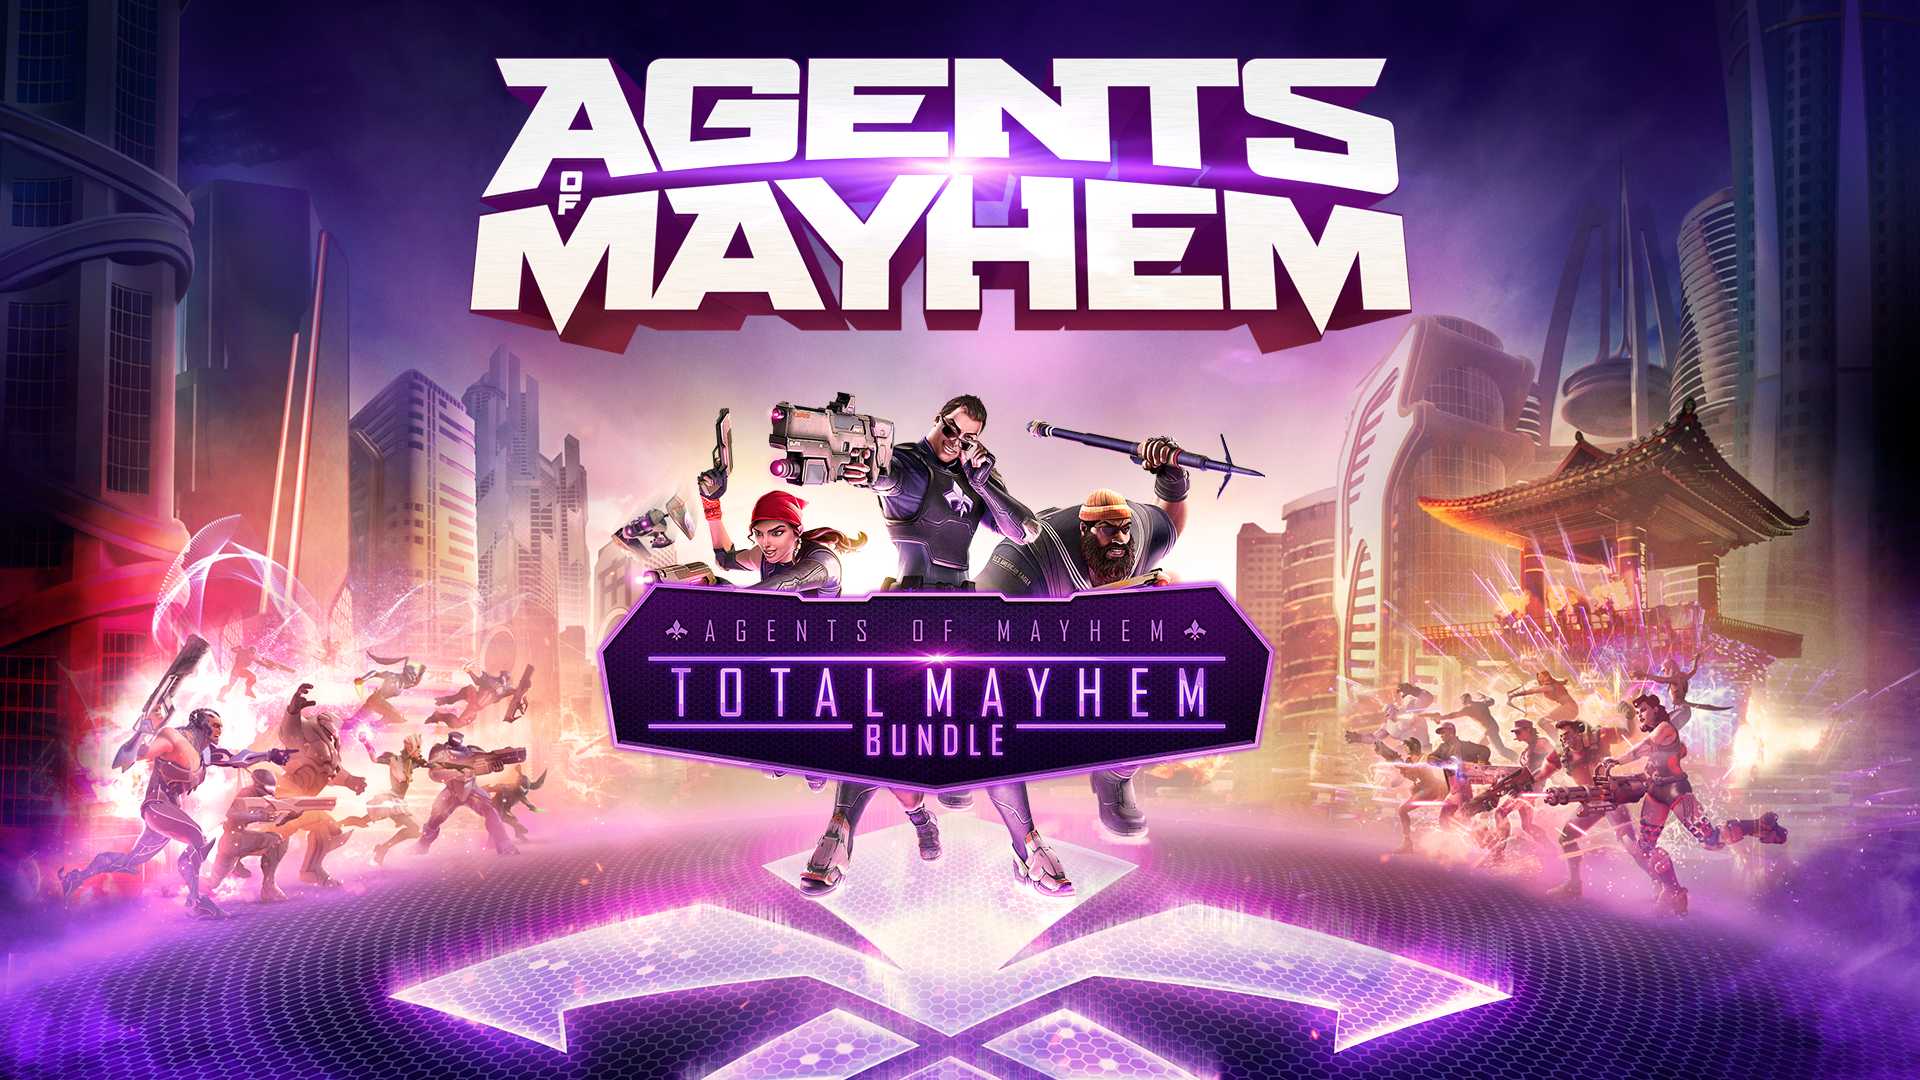 Agents of Mayhem - Total Mayhem Bundle 